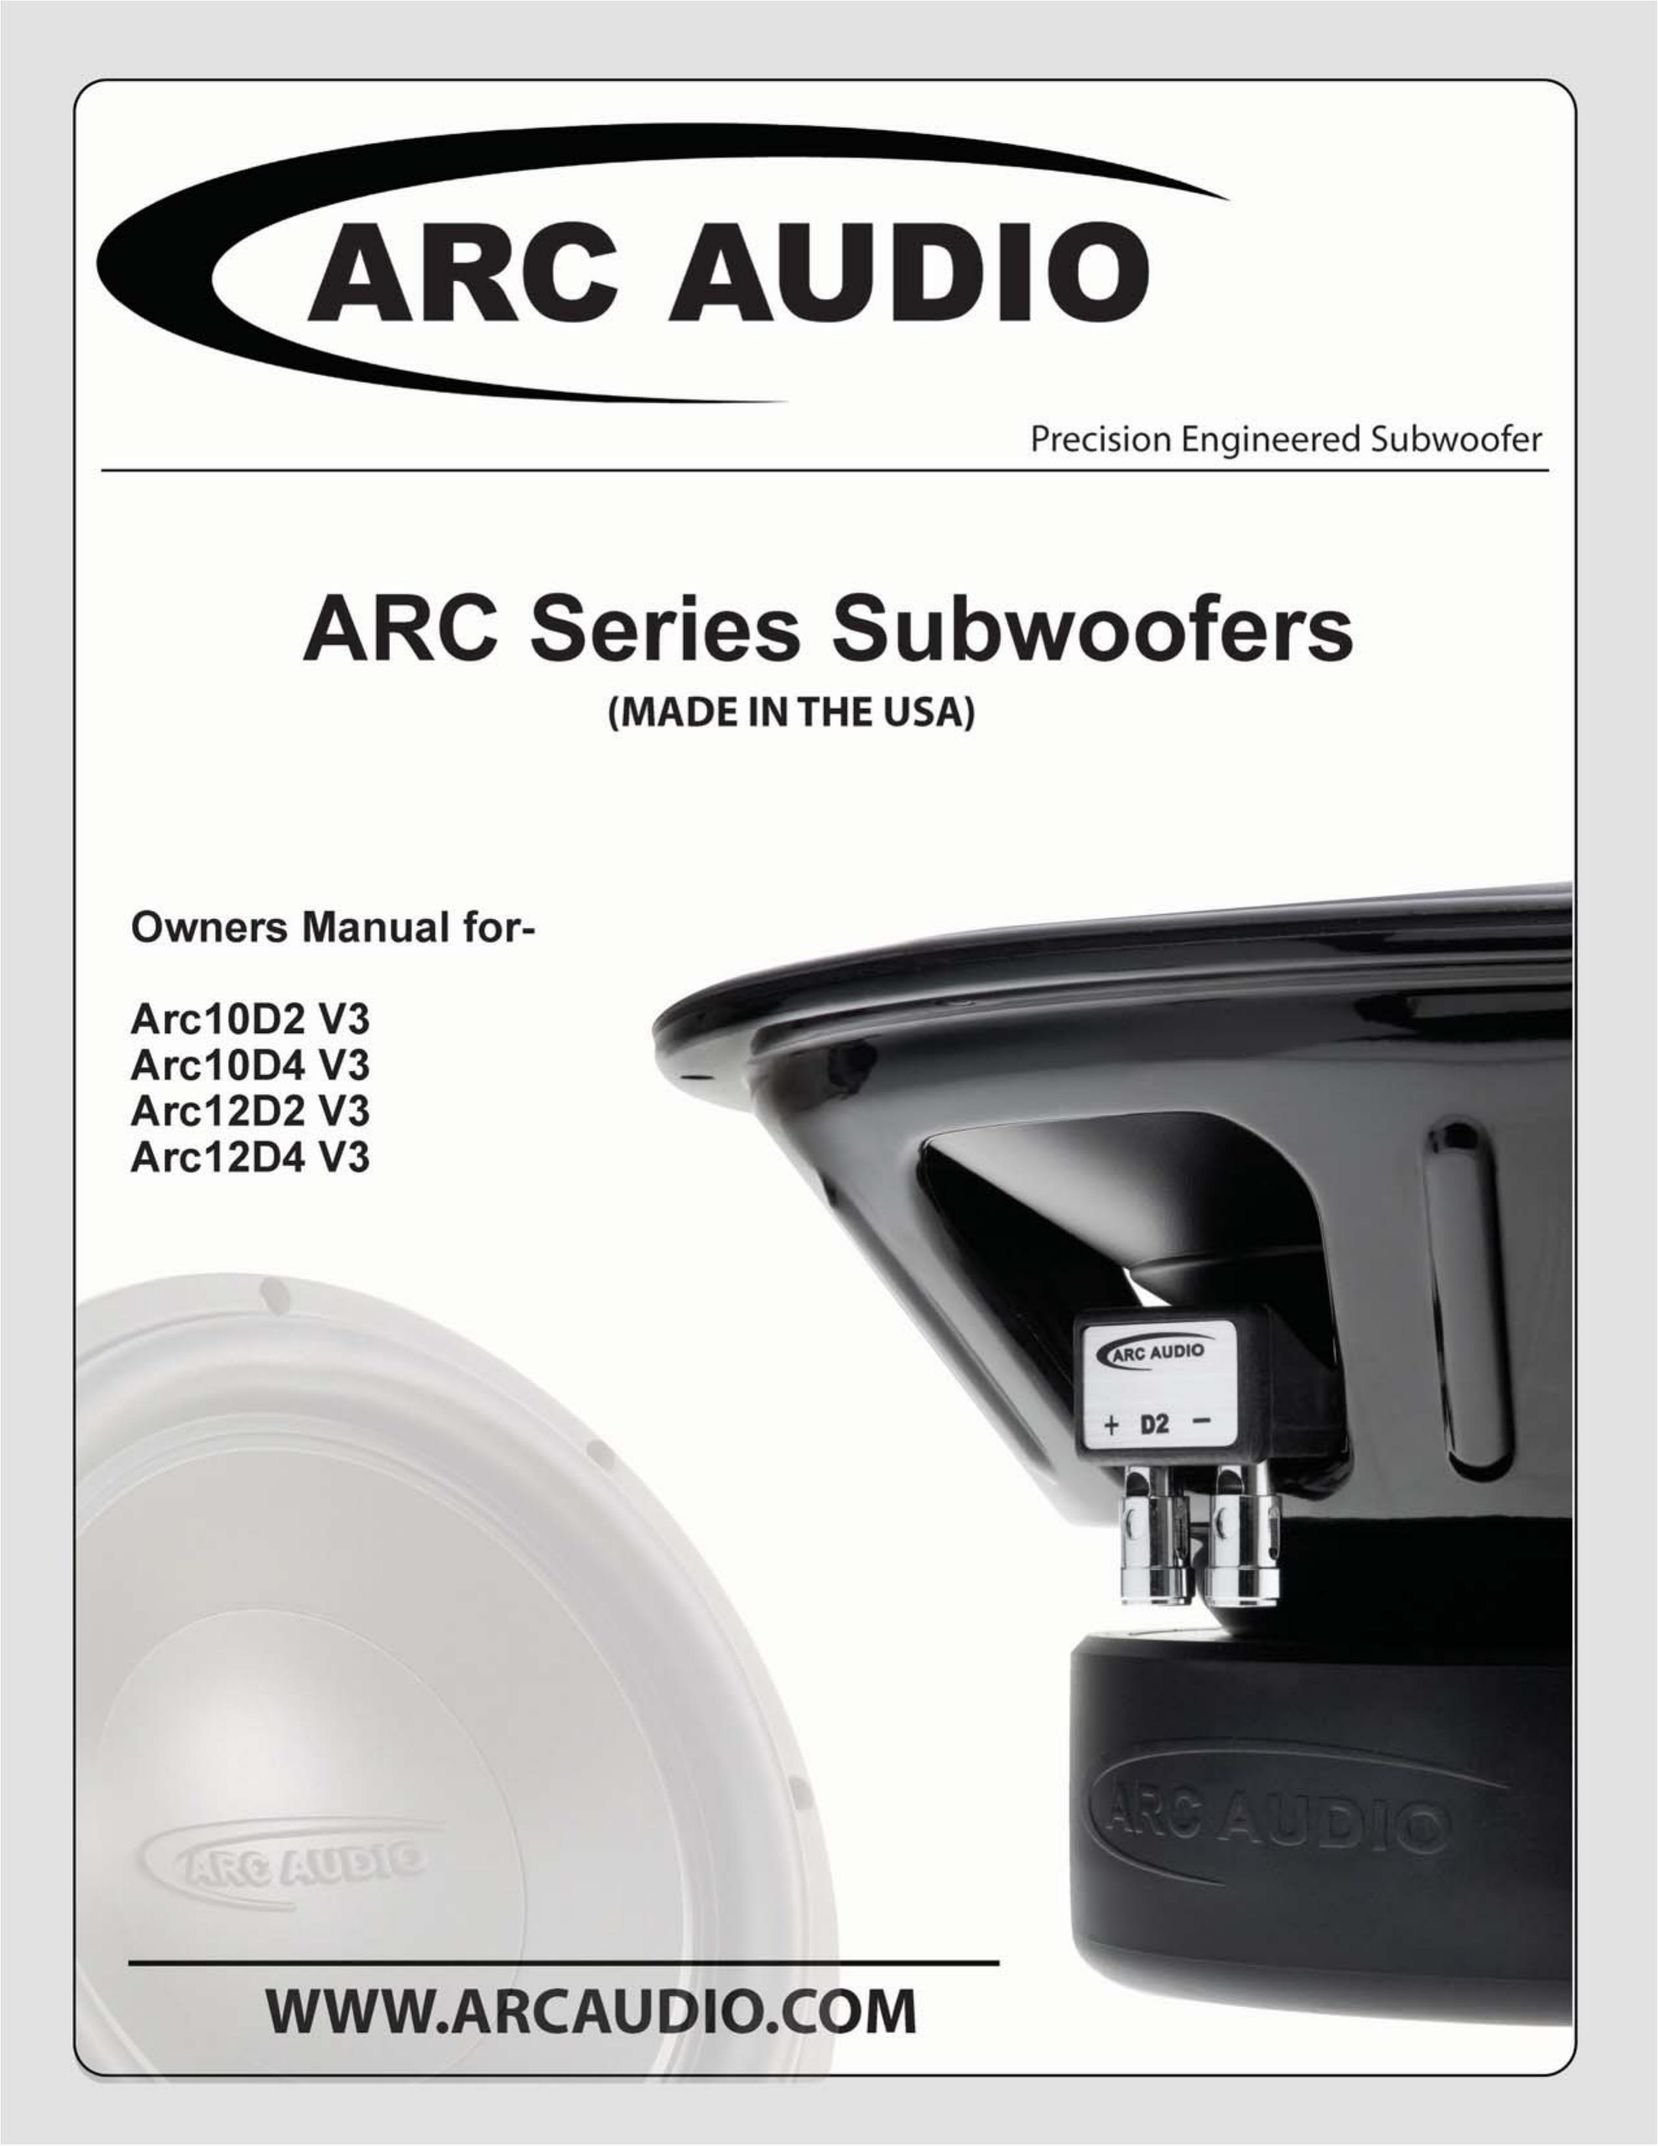 ARC Audio ARC12D2 V3 Speaker User Manual